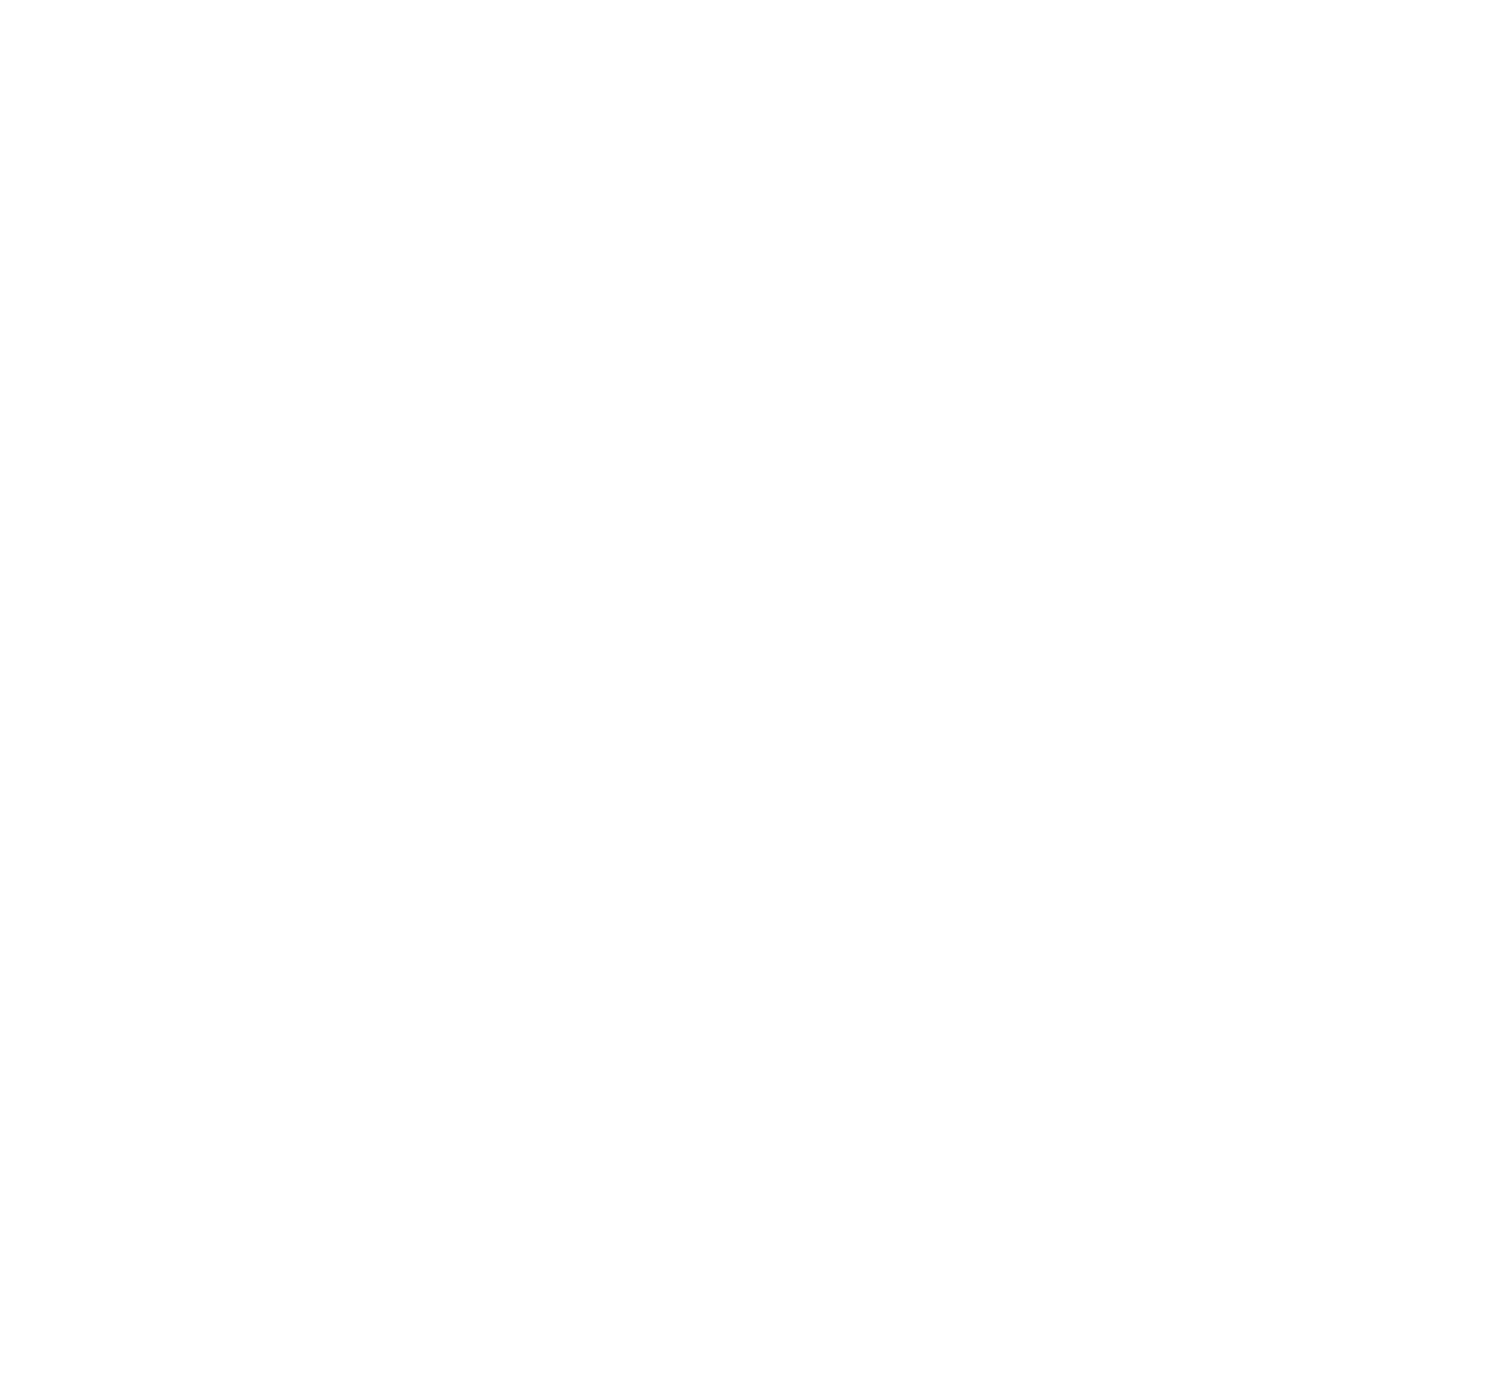 Imagination Yoga